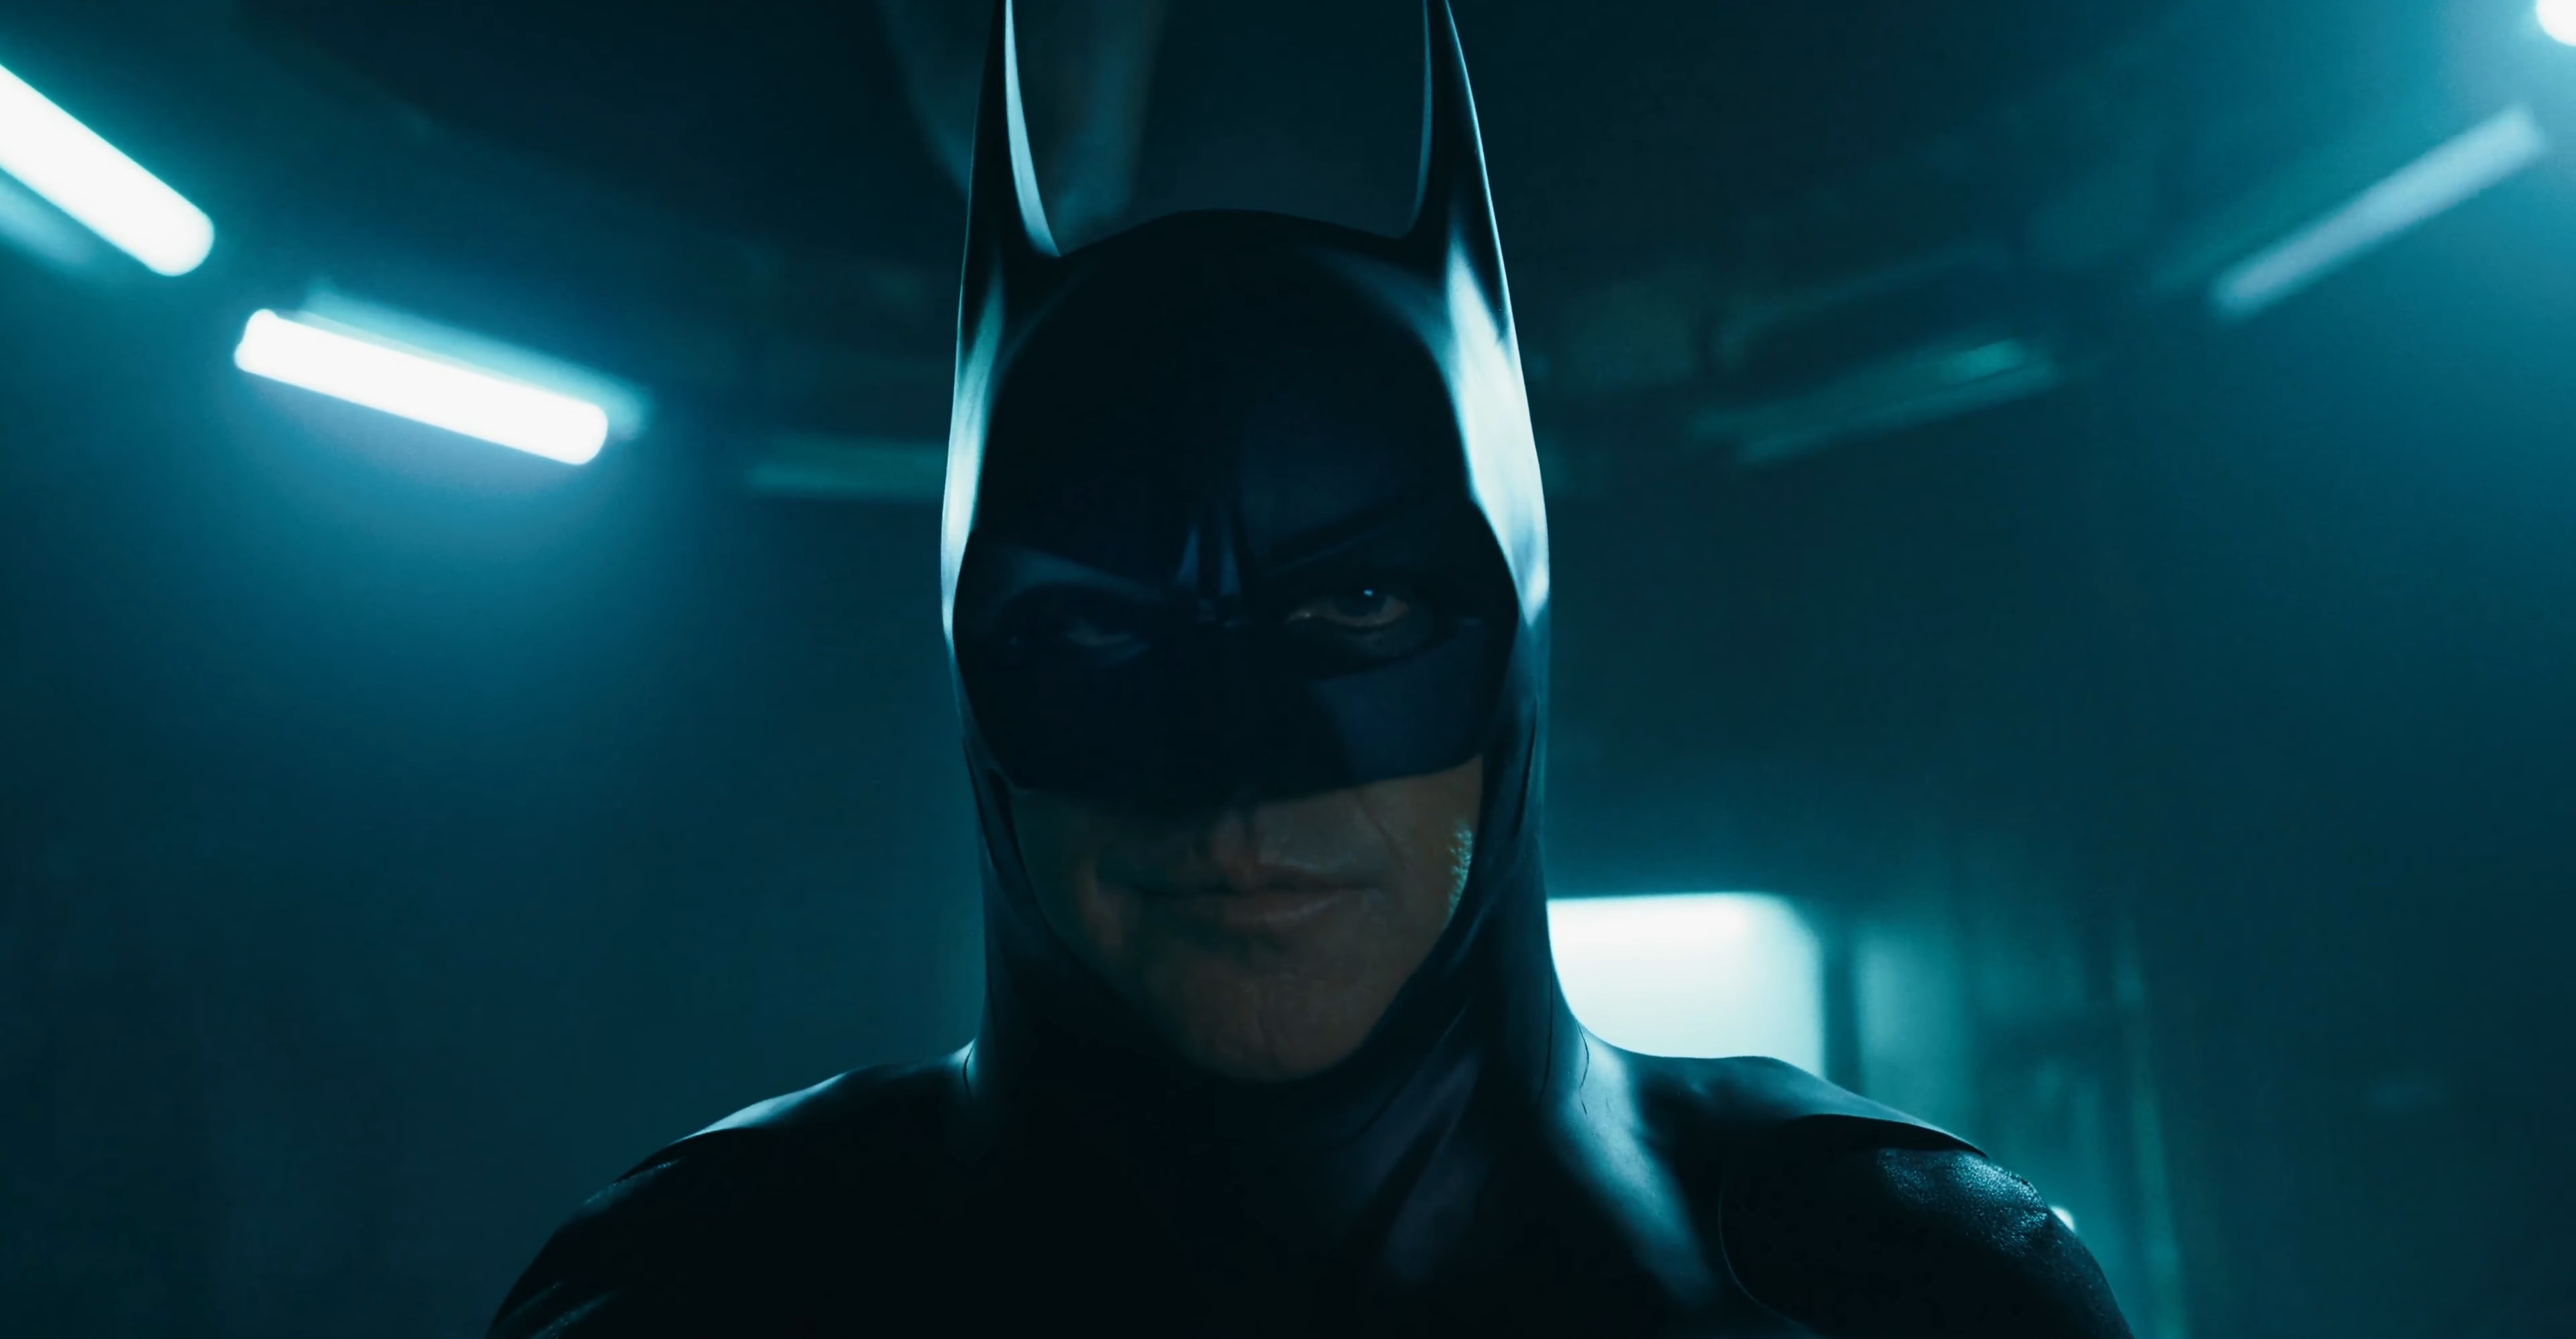 The Lego Batman Movie' Trailer: Move Over, Batfleck, There's A New